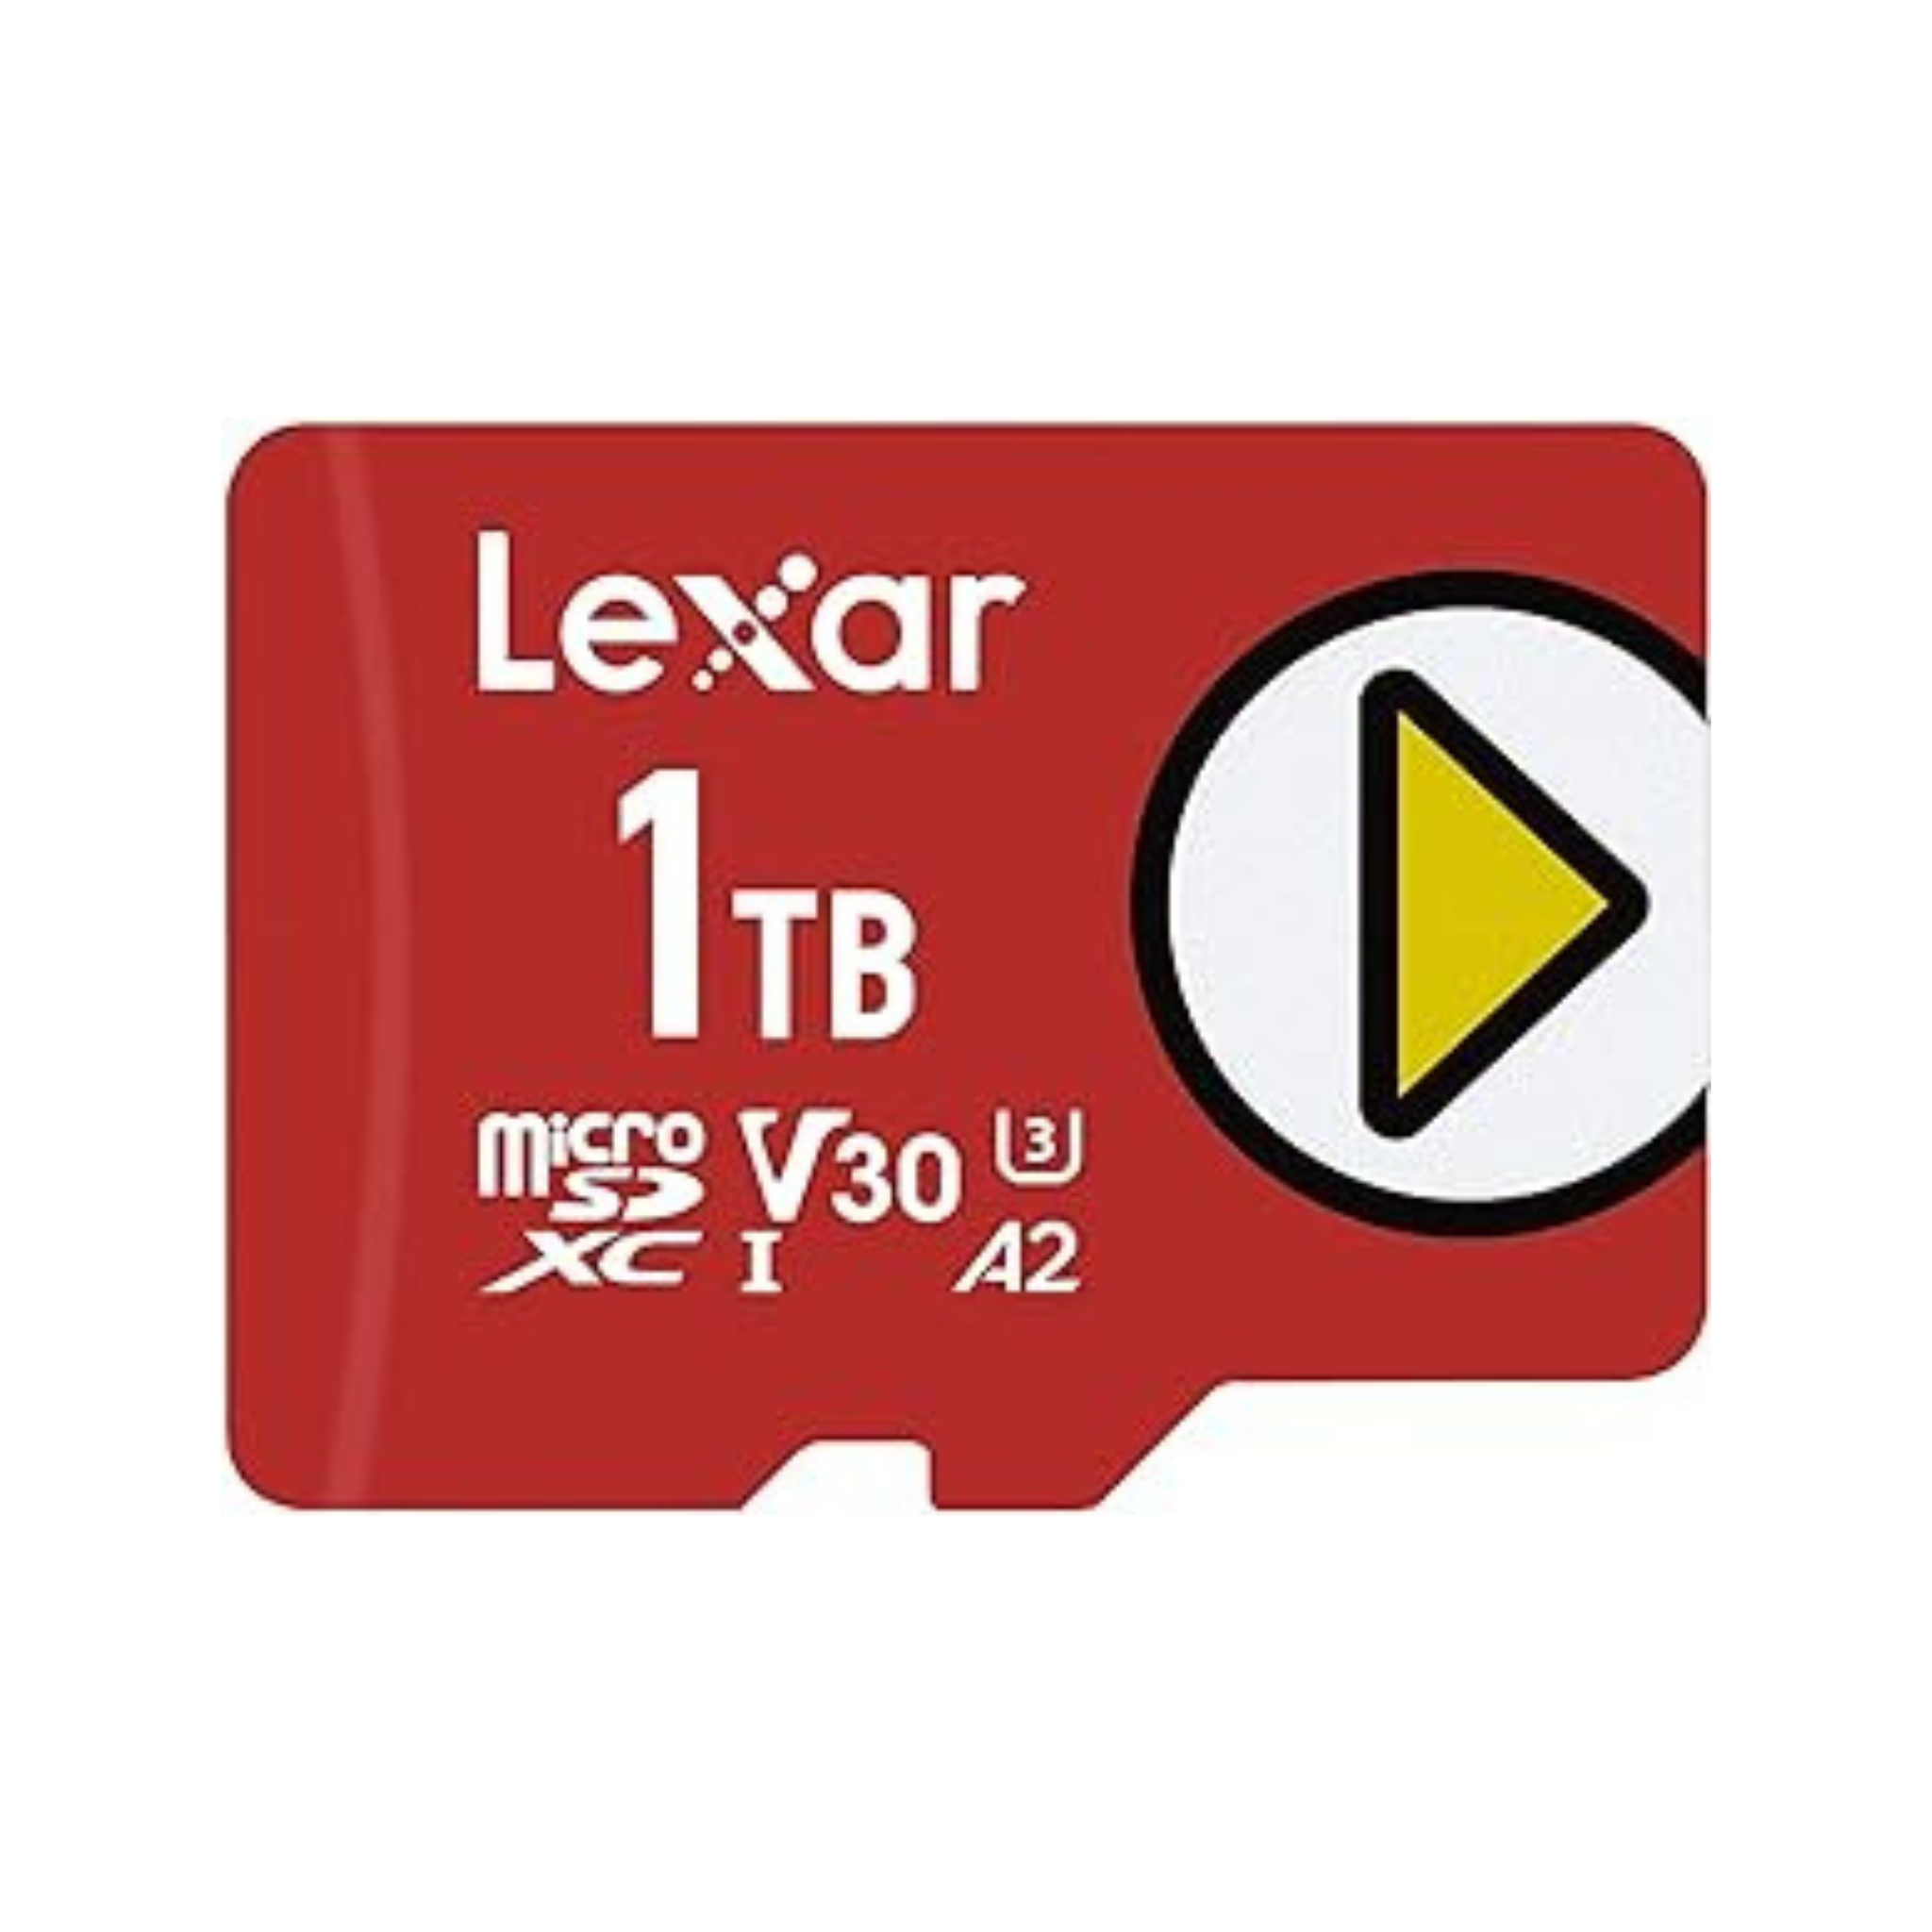 1TB Lexar PLAY microSDXC Memory Card